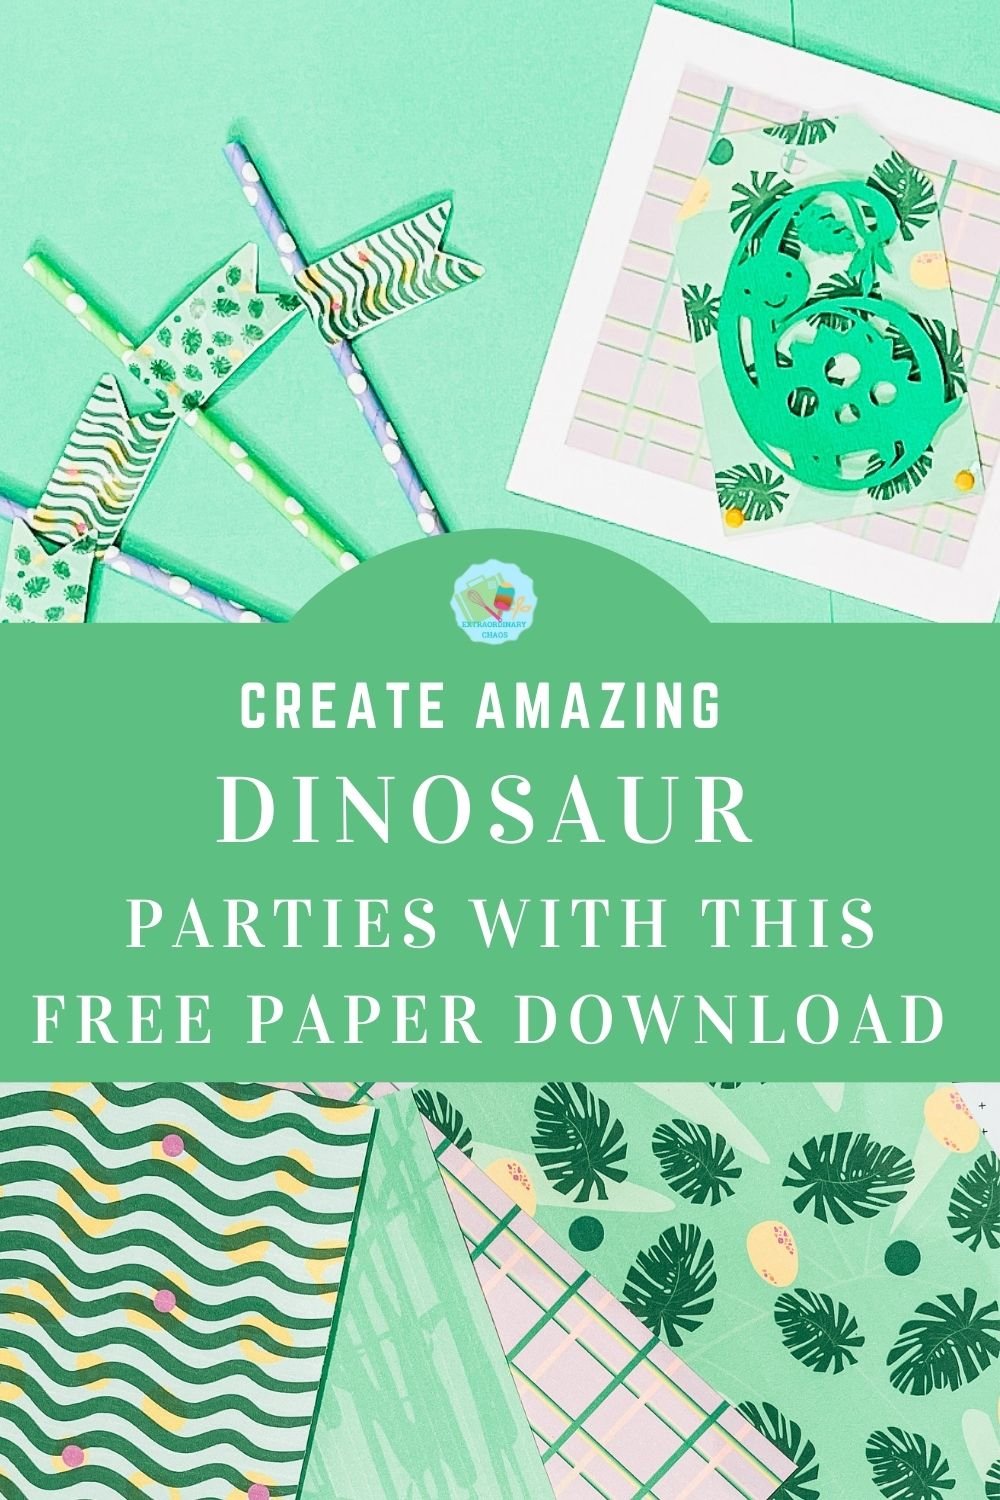 Free Dinosaur Paper Downloads-2